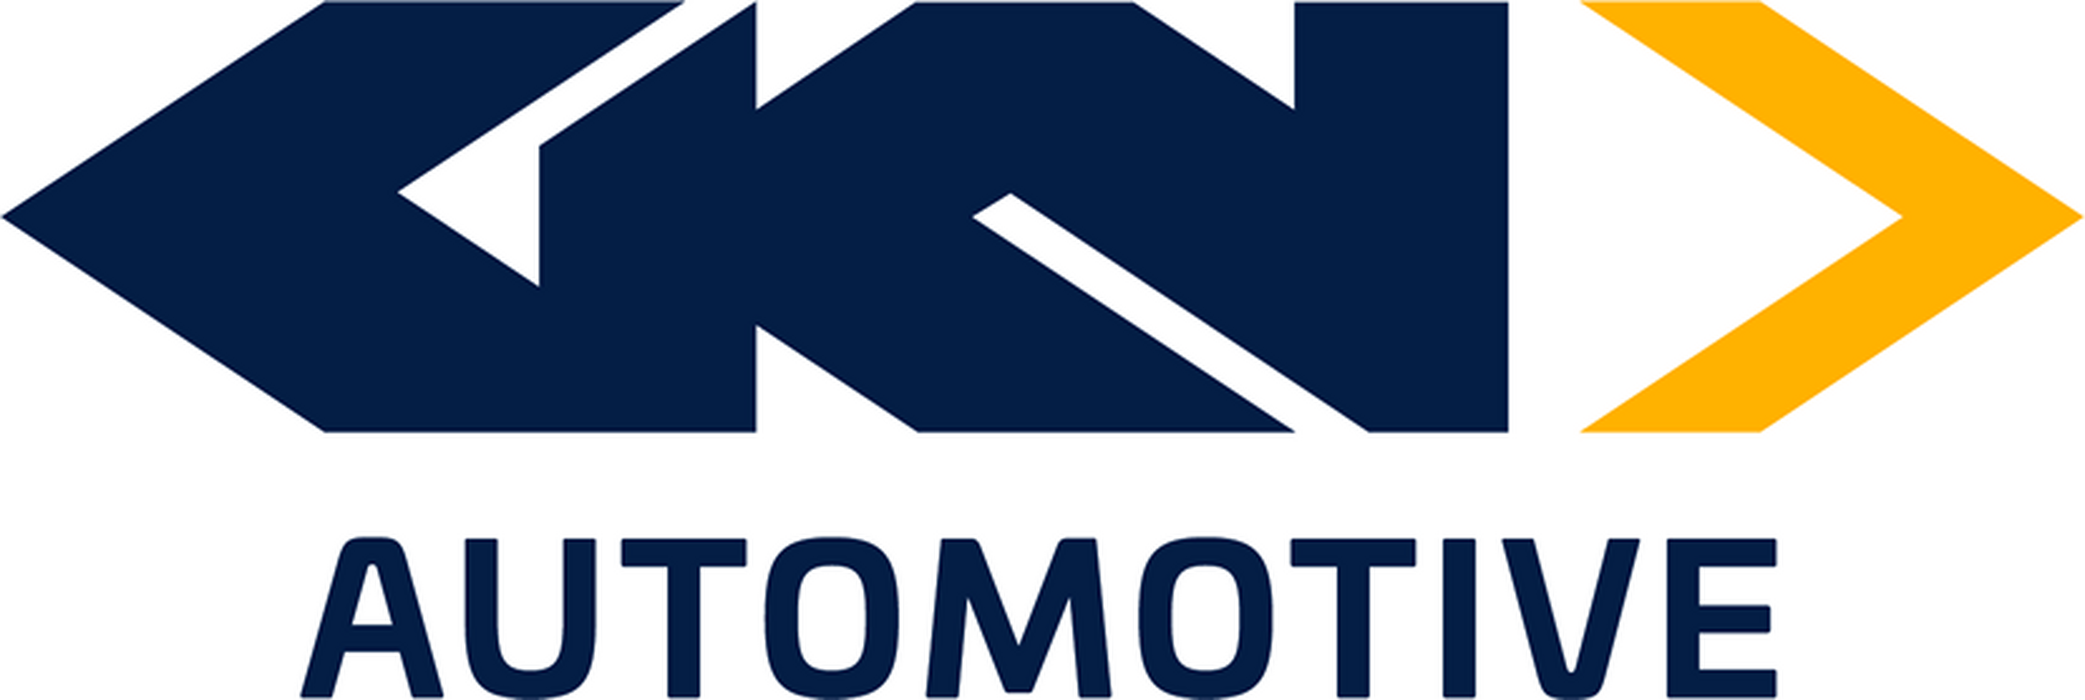 gkn-automotive-logo